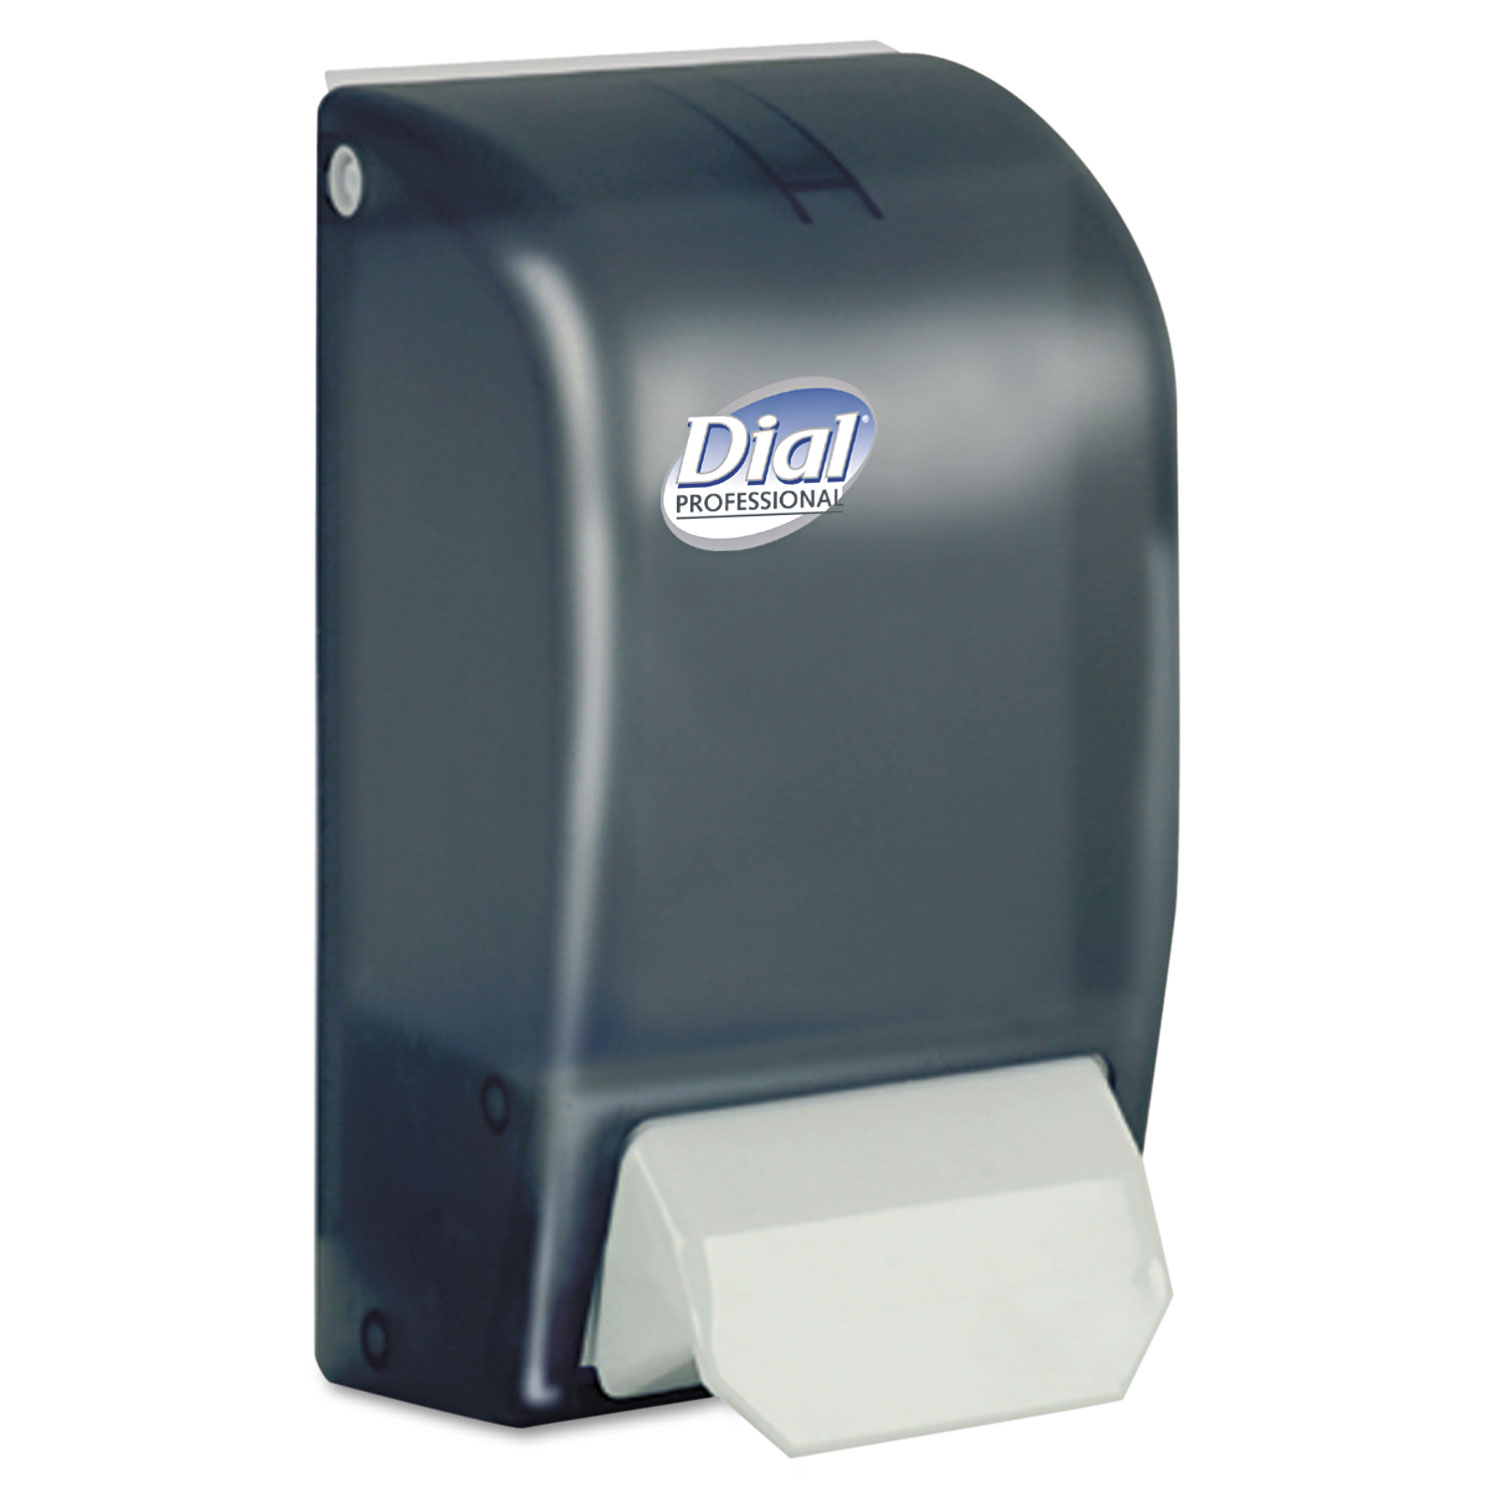  Dial Professional 6055 1 Liter Manual Foaming Dispenser, 1000 mL, 5 x 4.5 x 9, Smoke (DIA06055) 